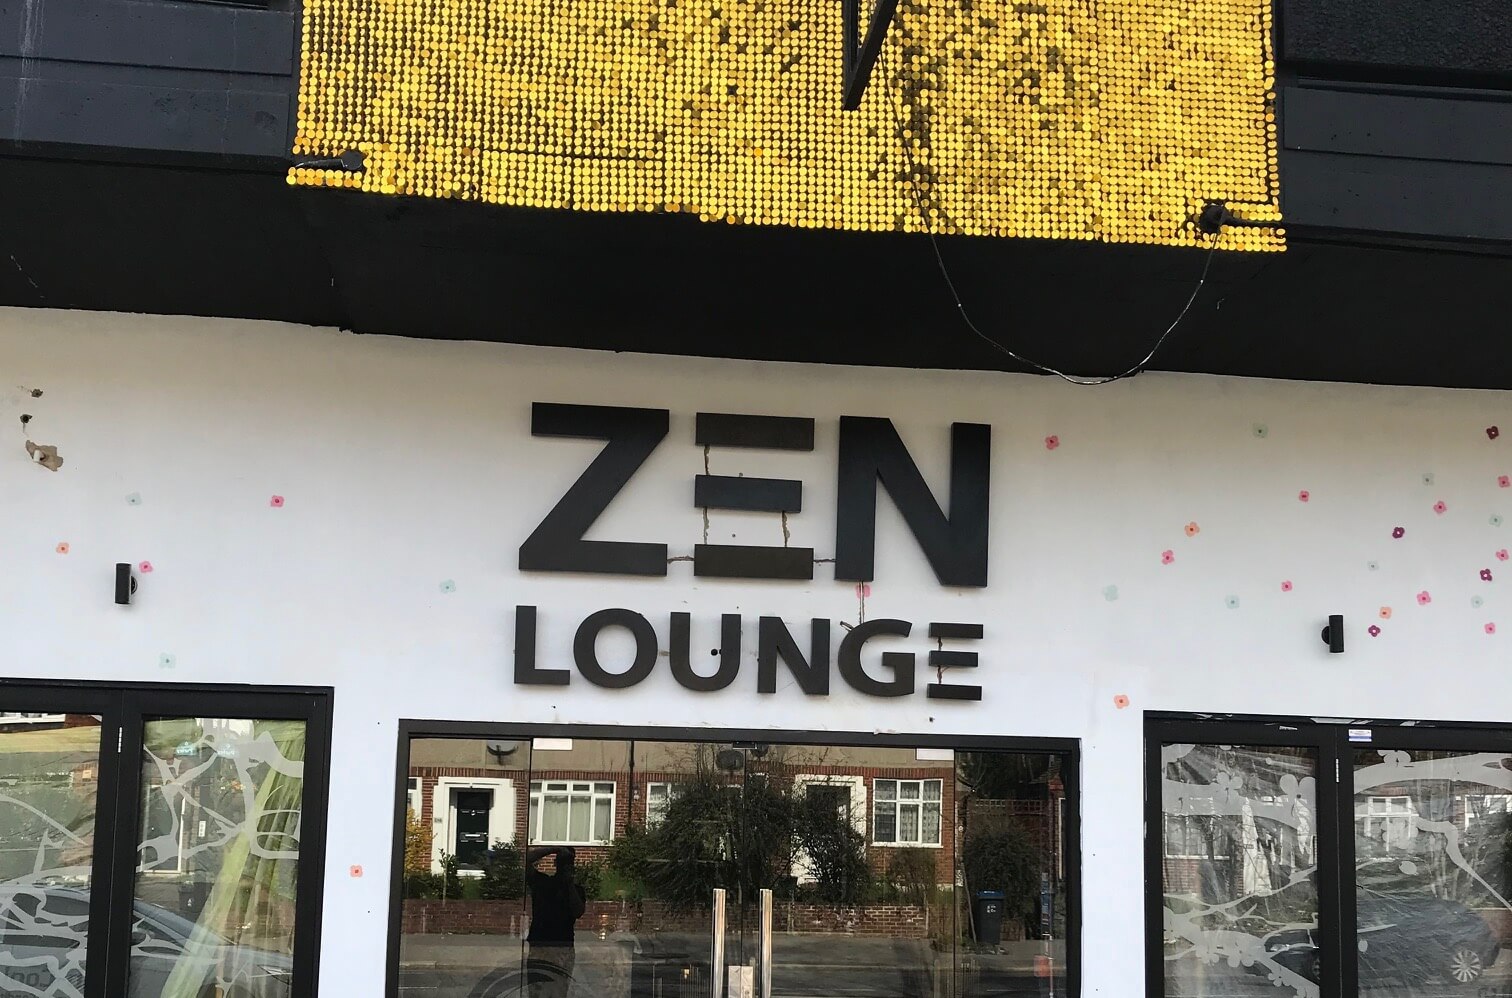 The exterior of the Zen Lounge nightclub